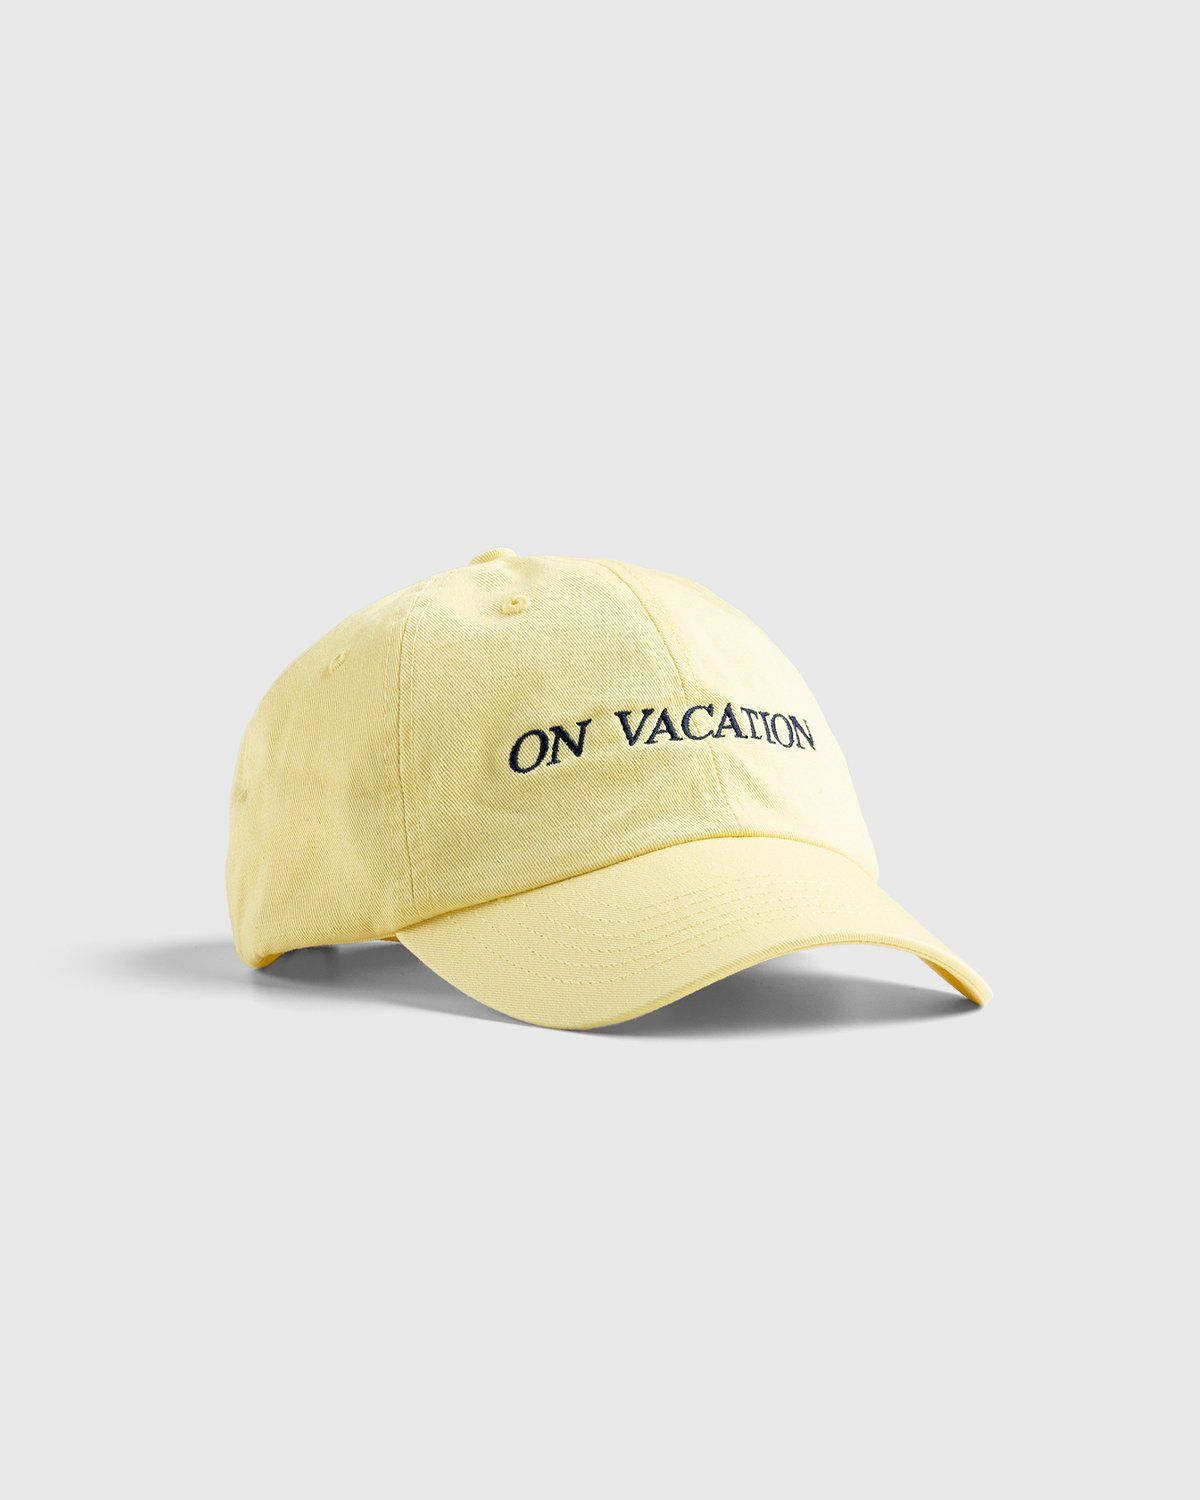 HO HO COCO – On Vacation Cap Yellow - Caps - Yellow - Image 1